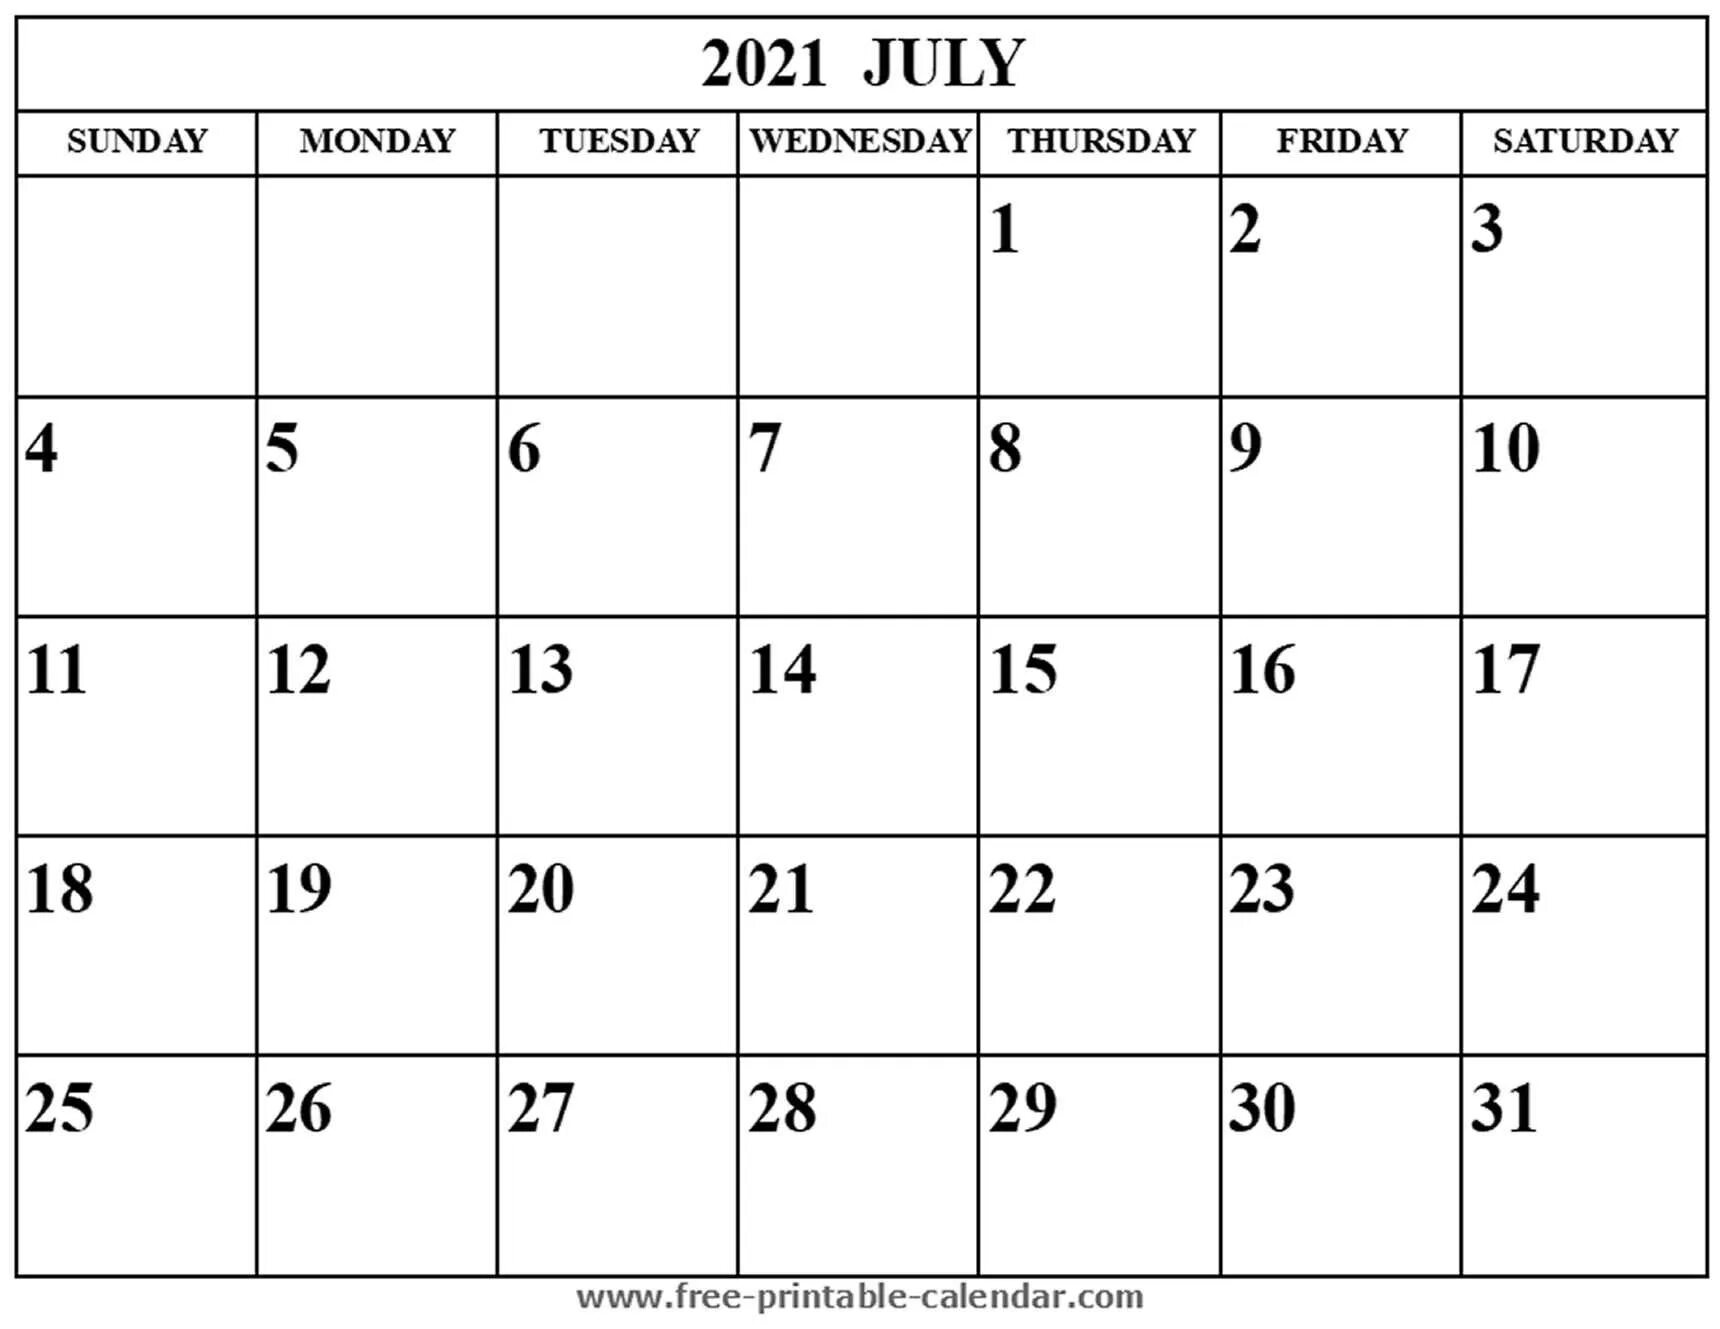 Календарь март 2014 года. Август календарь для заметок. Август 2021 года календарь. Календарь август пустой. Календарь на август для записей.